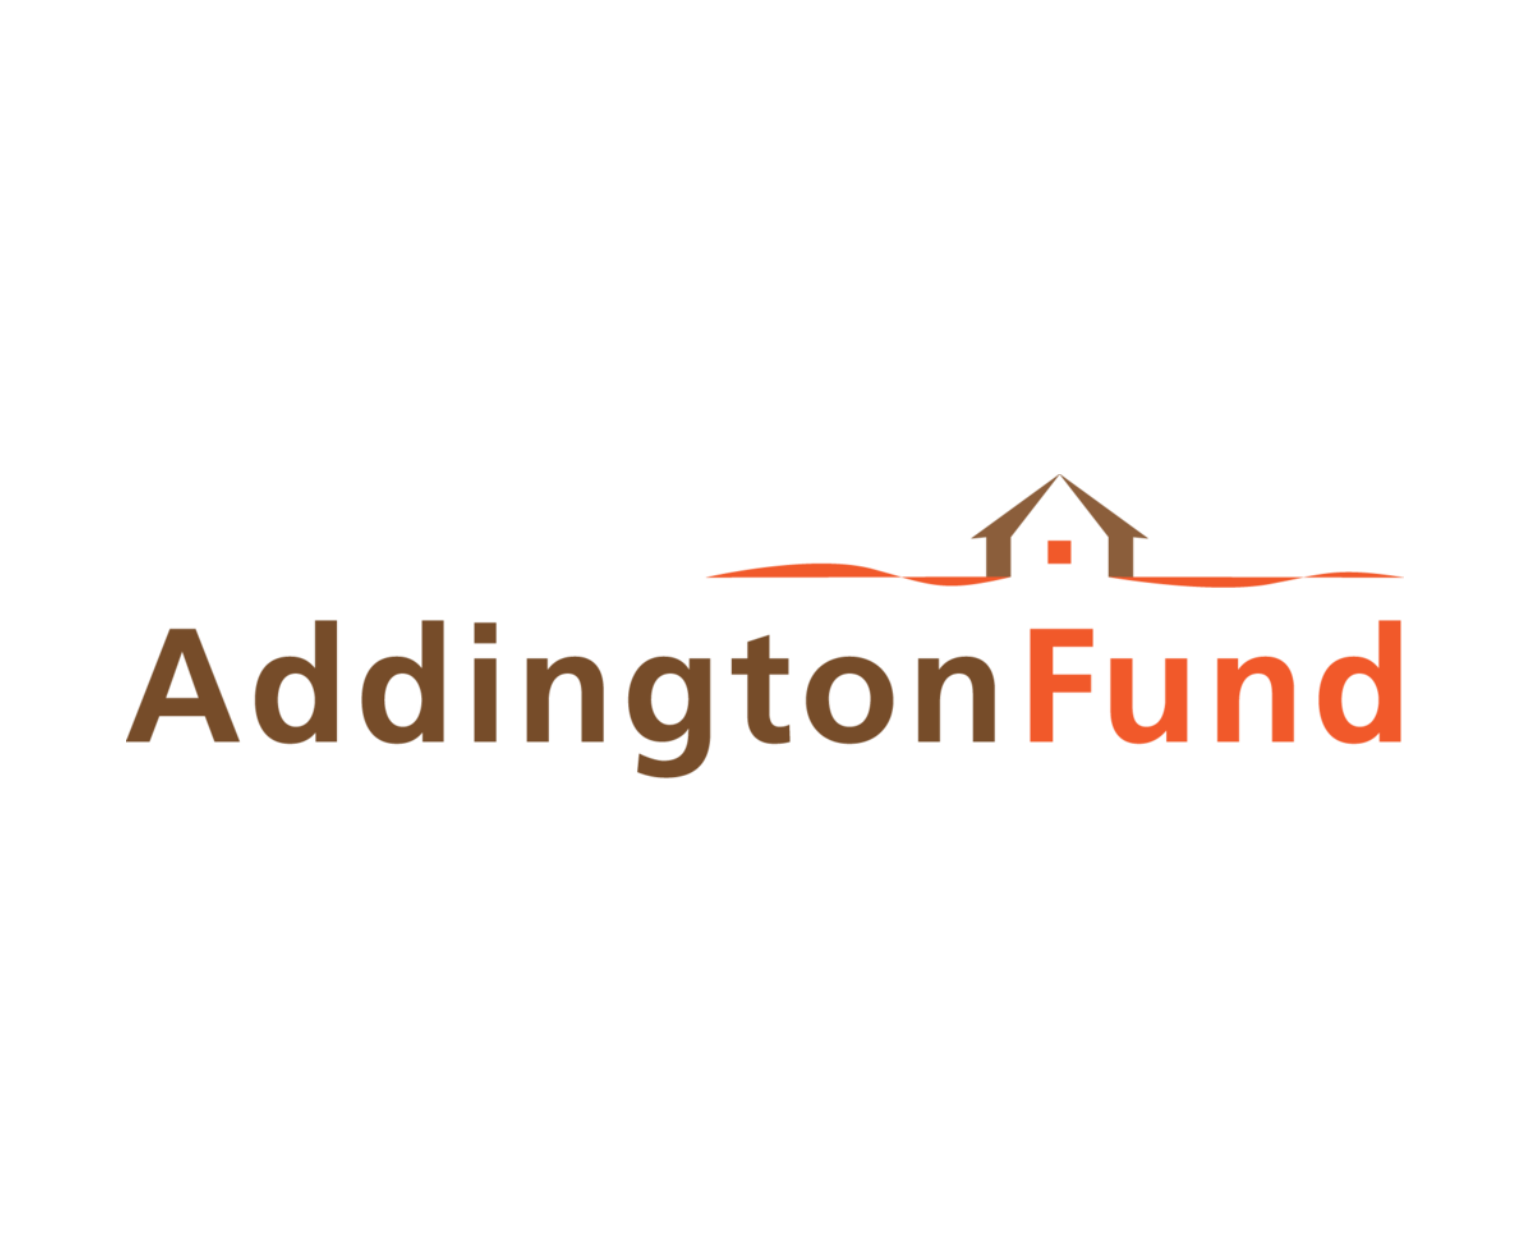 Addington Fund Logo